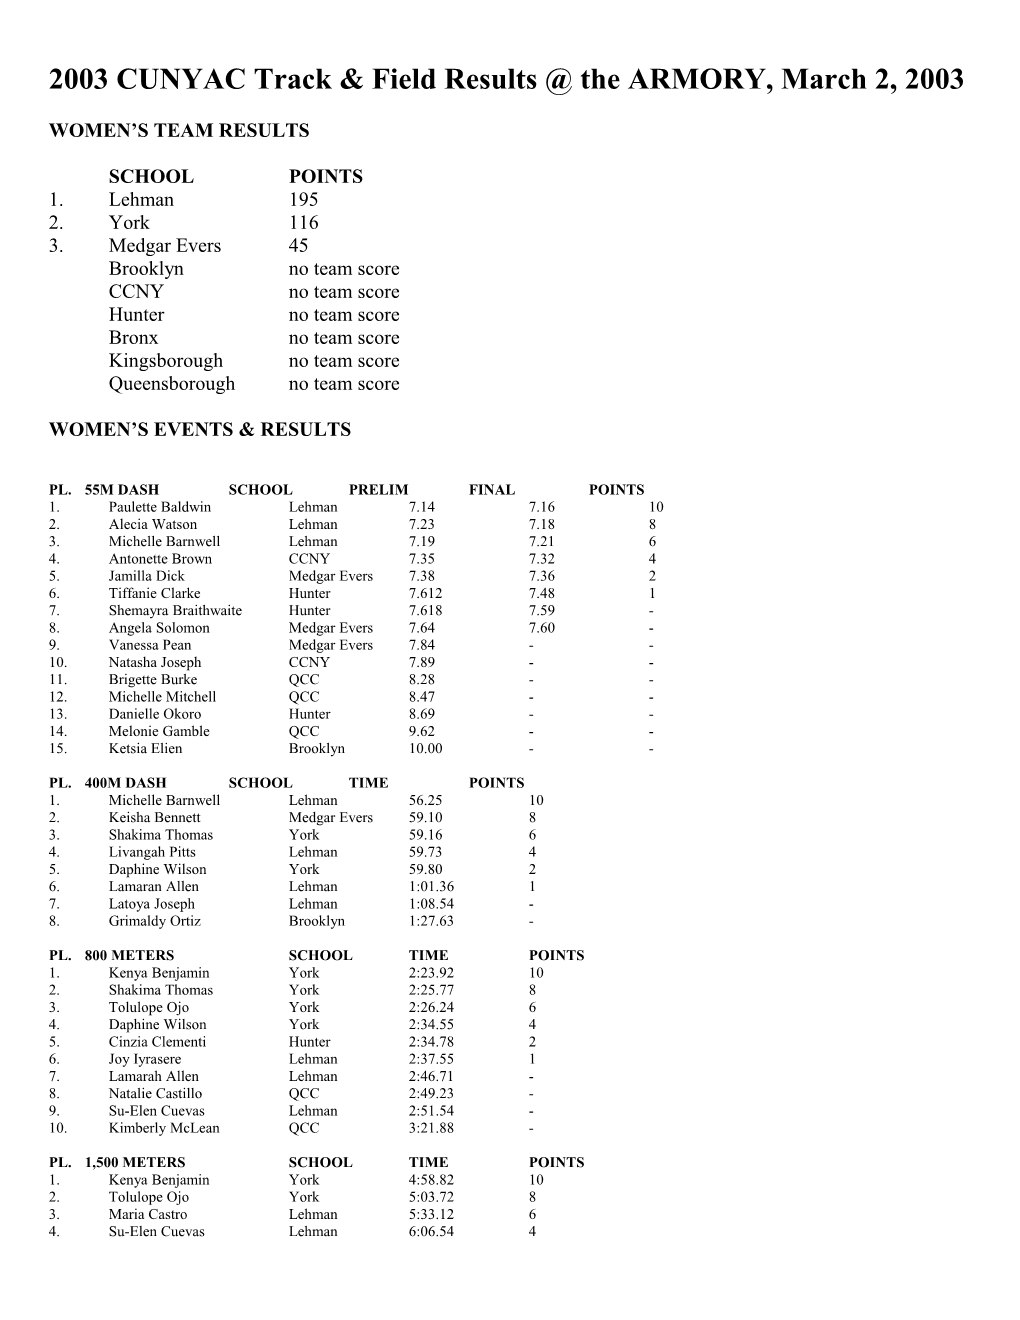 2003 CUNYAC Track & Field Entries